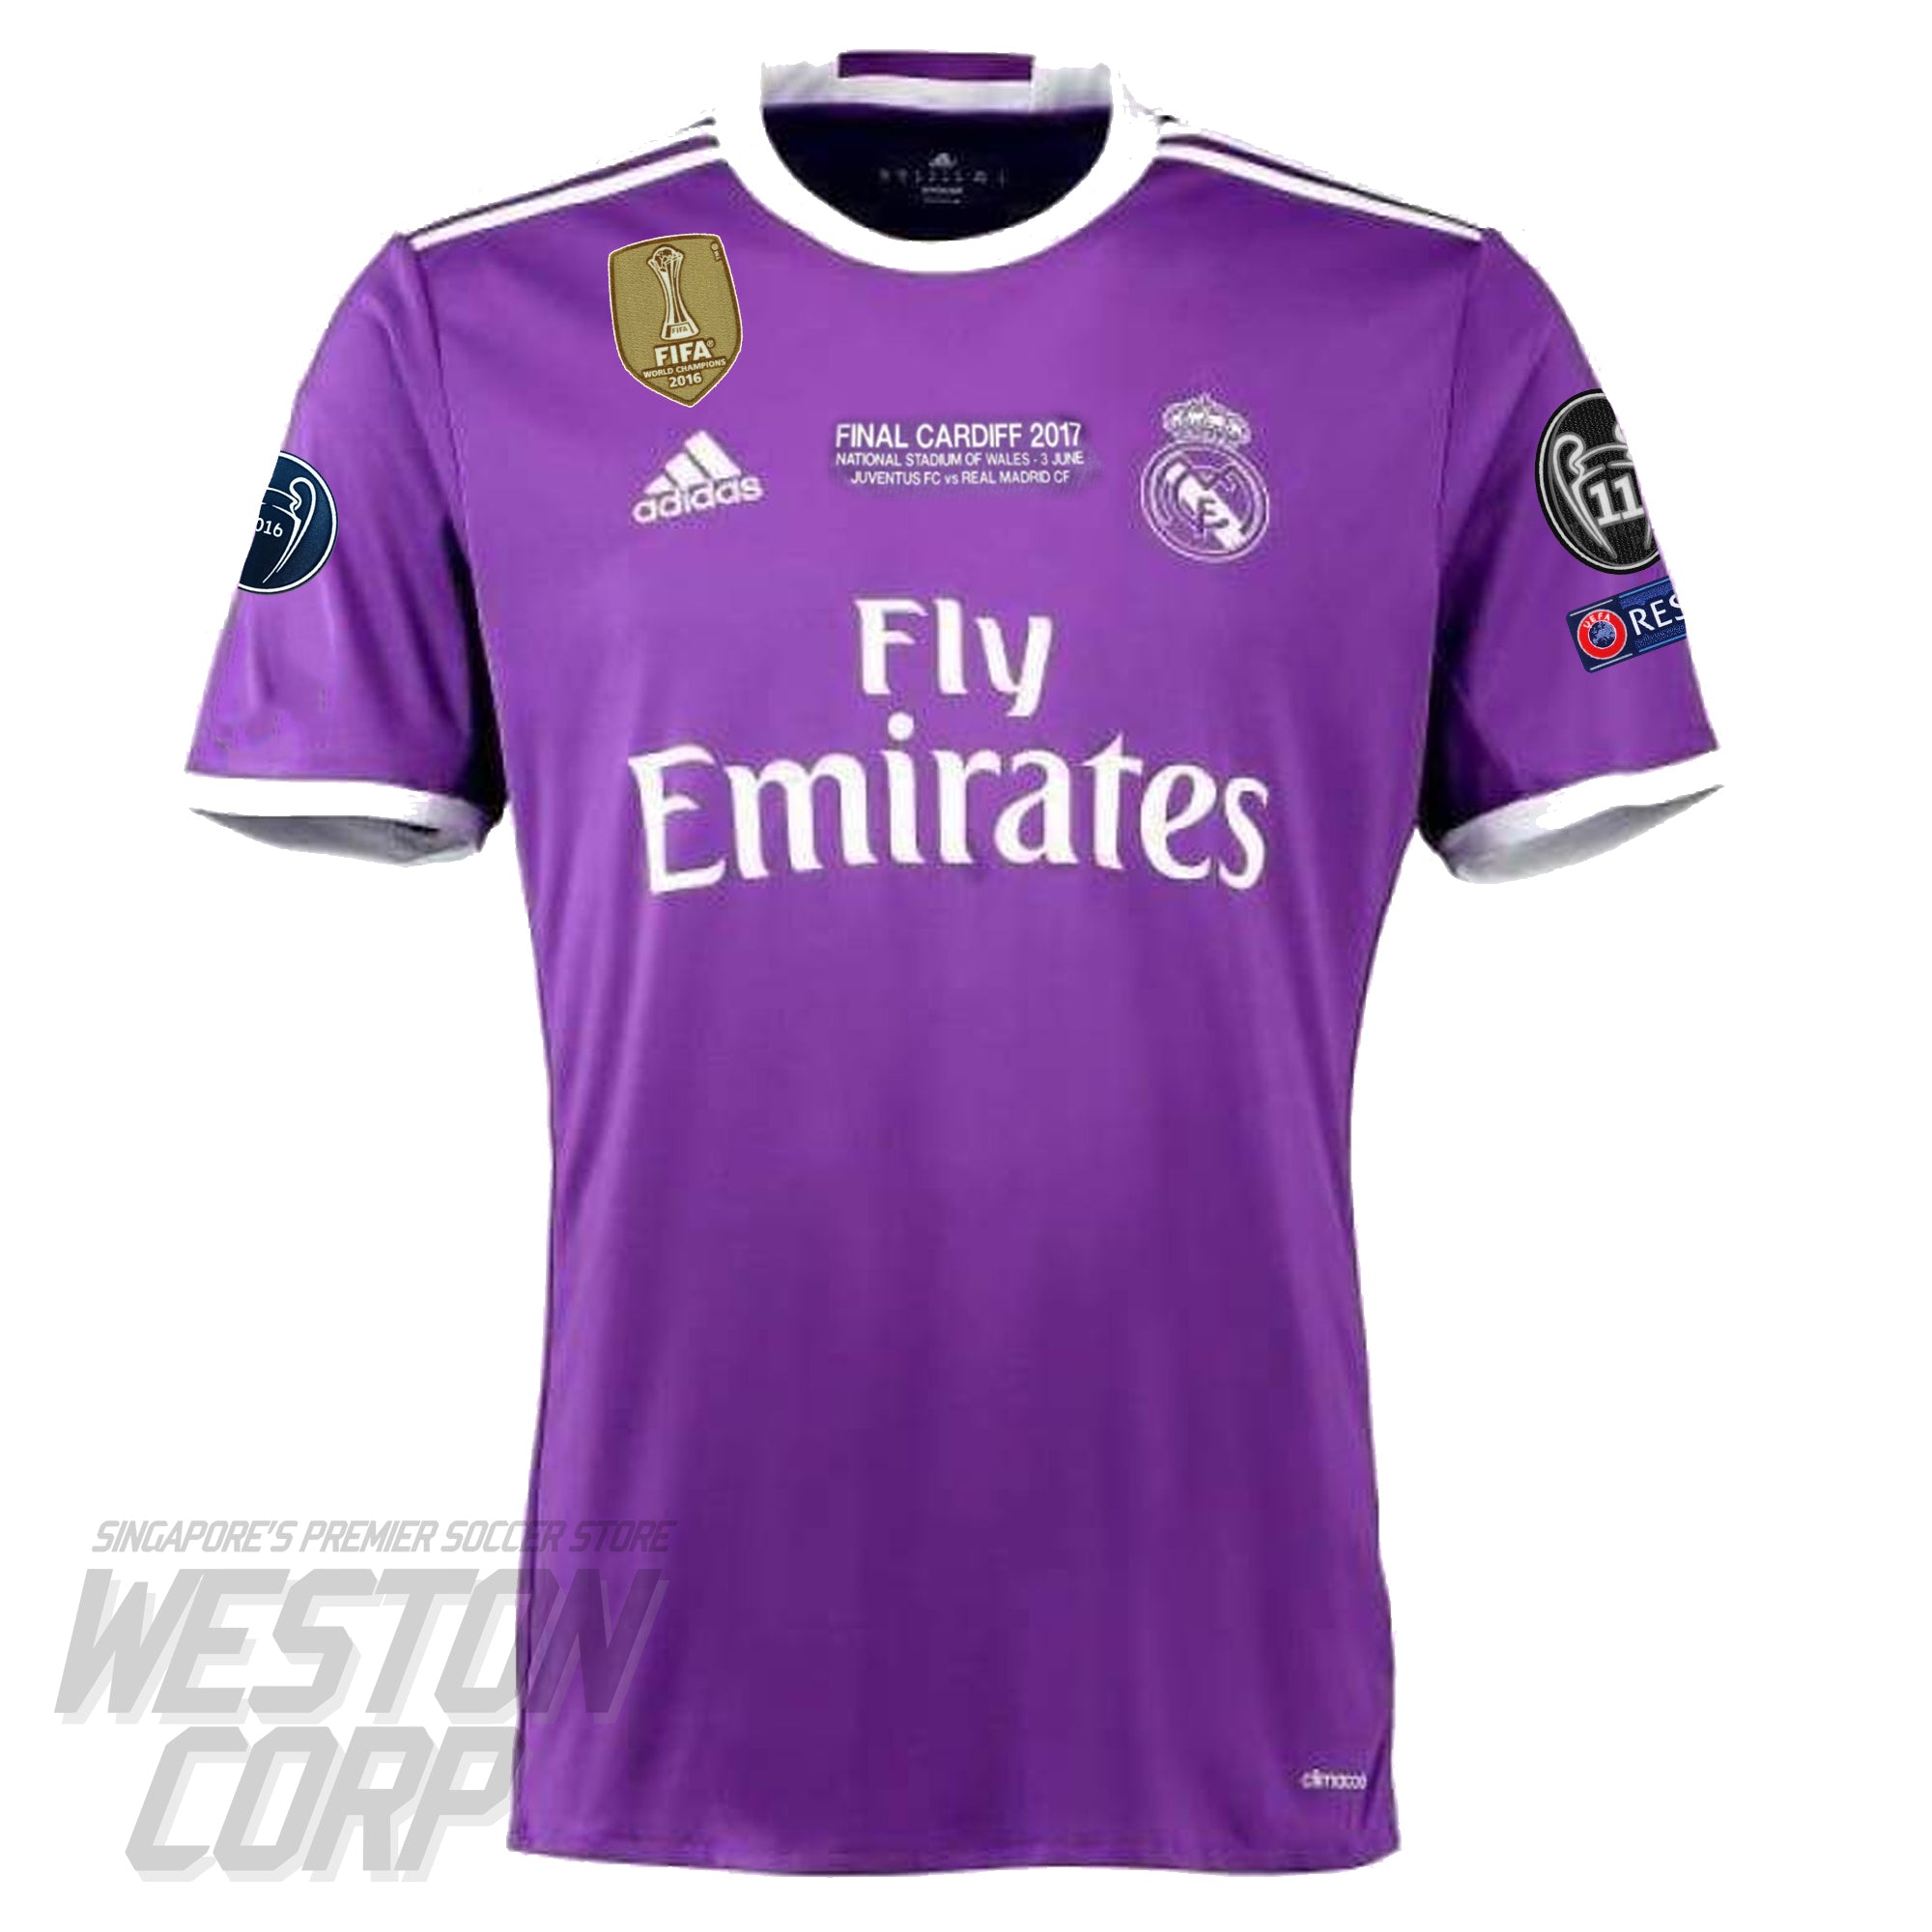 Real Madrid Adult 2016-17 Away Shirt w/ Badges Ronaldo Nameset Weston Corporation